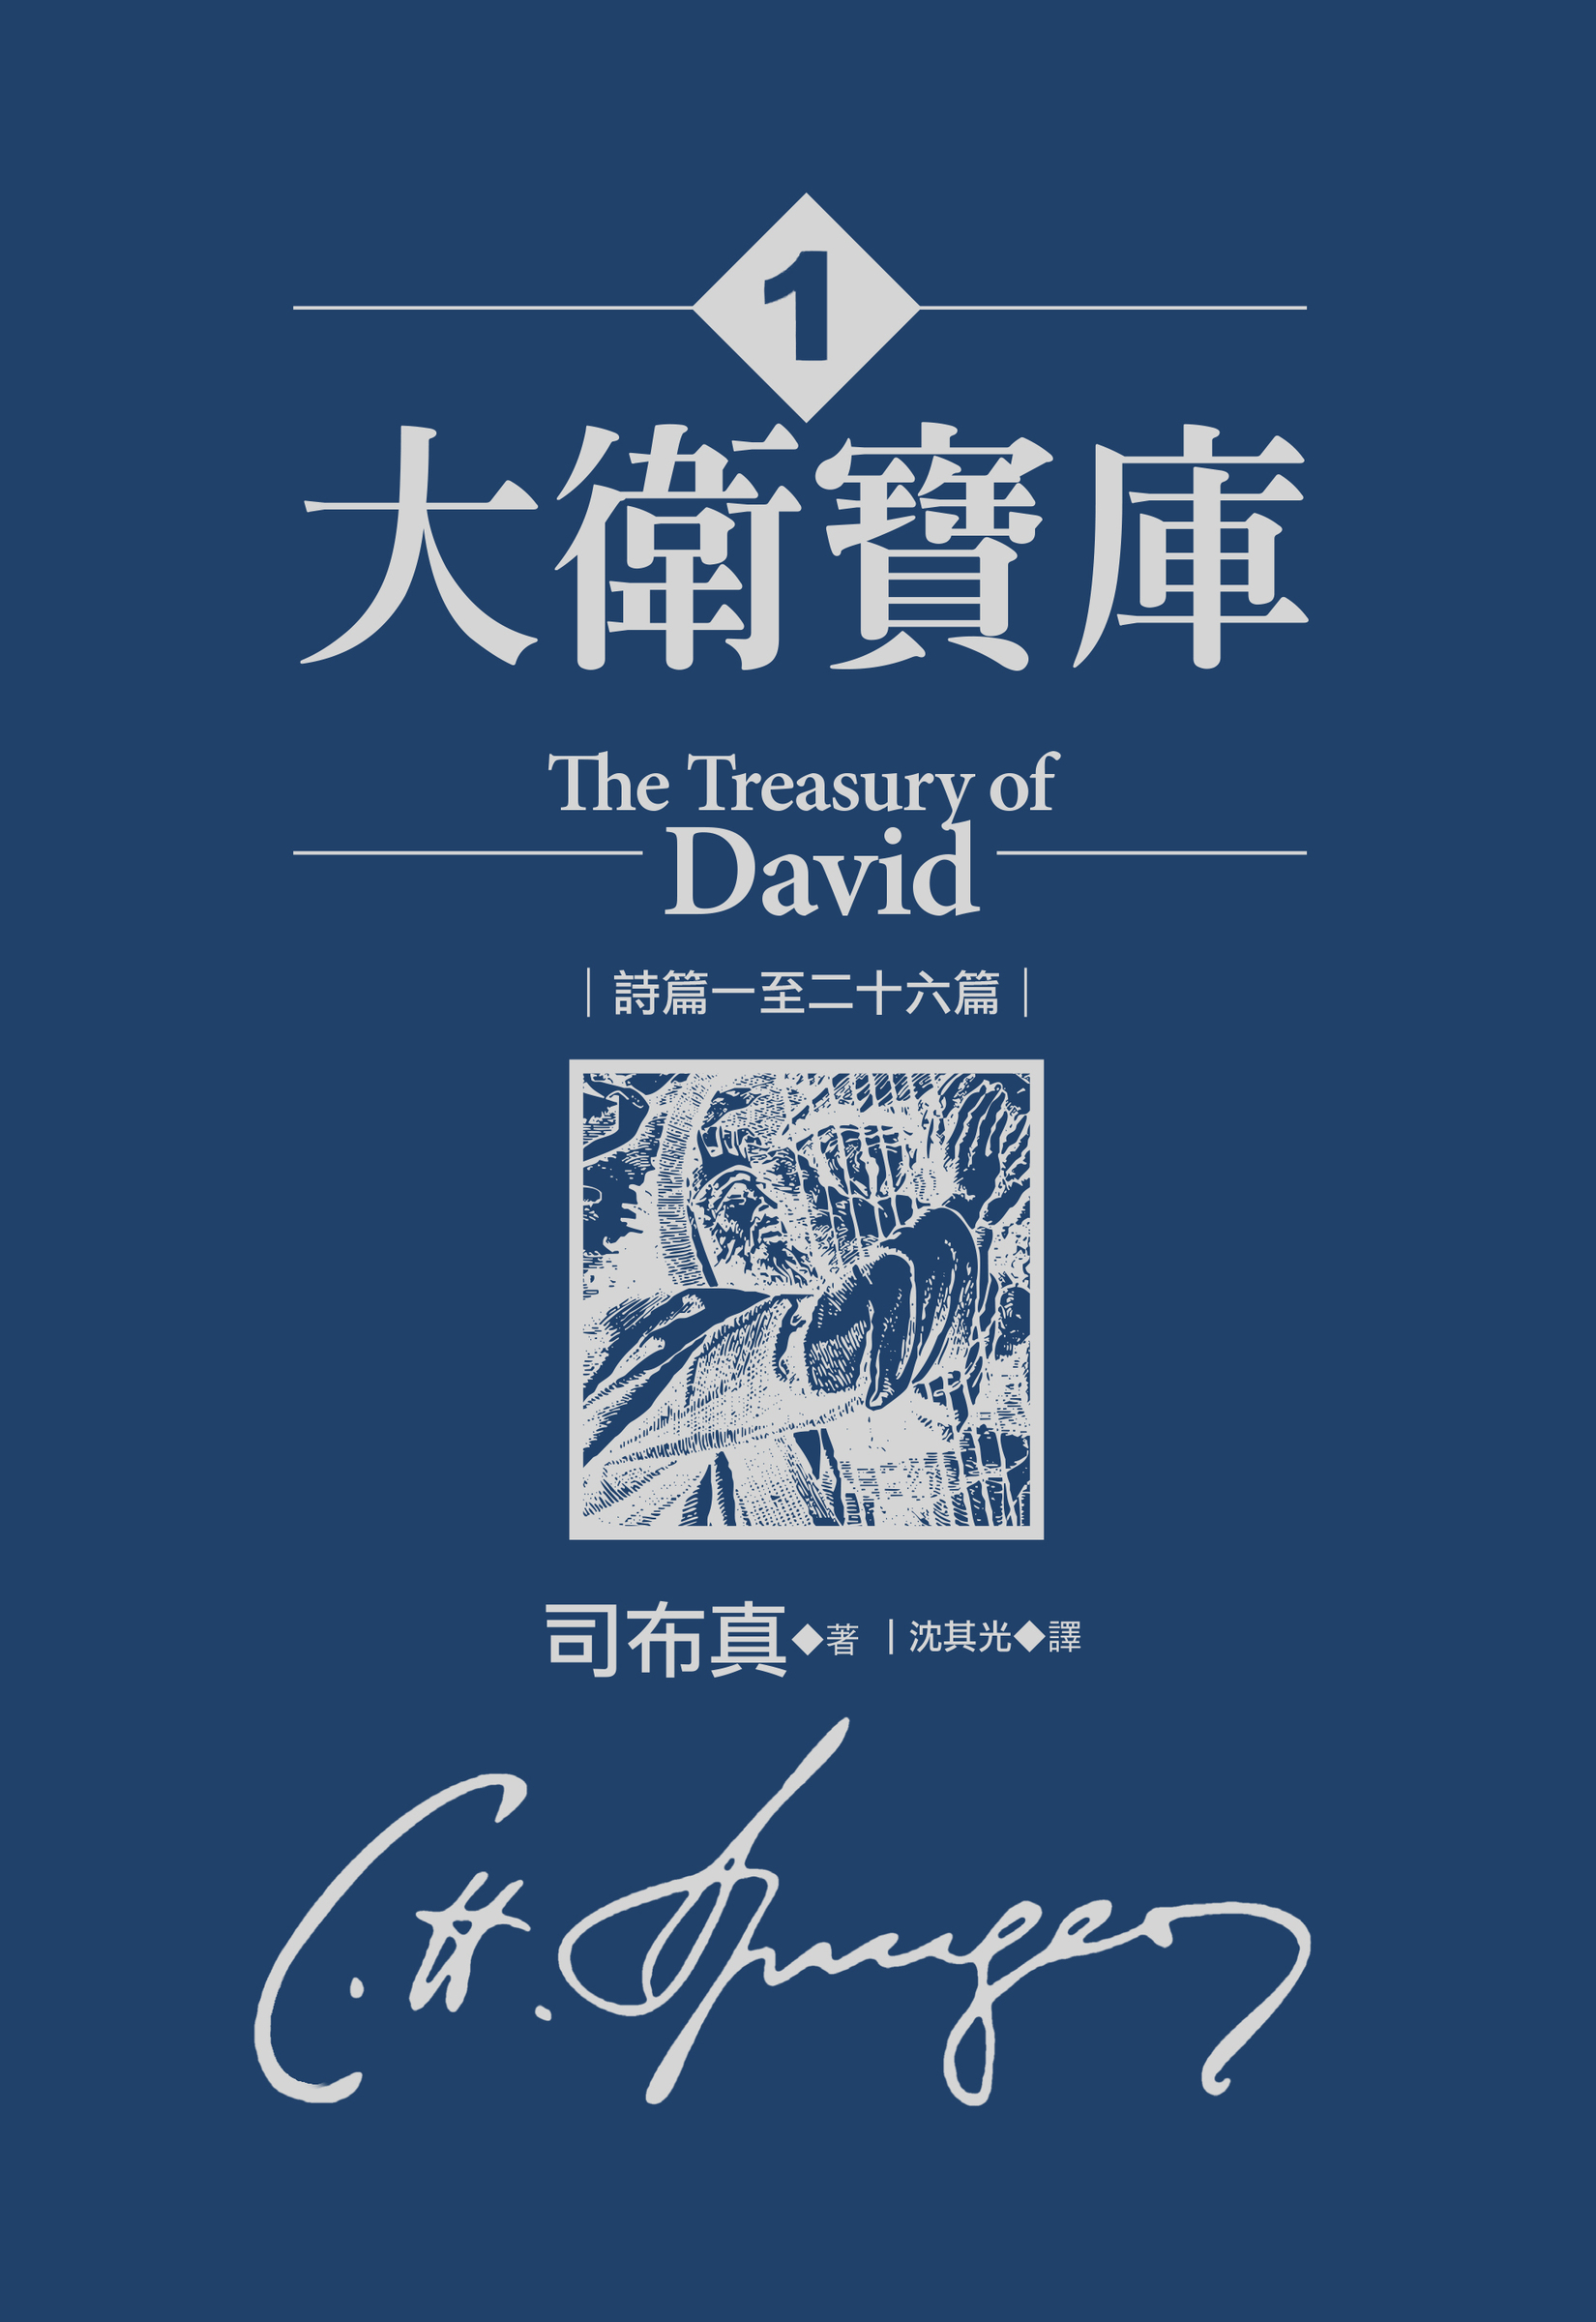 Treasure of David 1 COVER